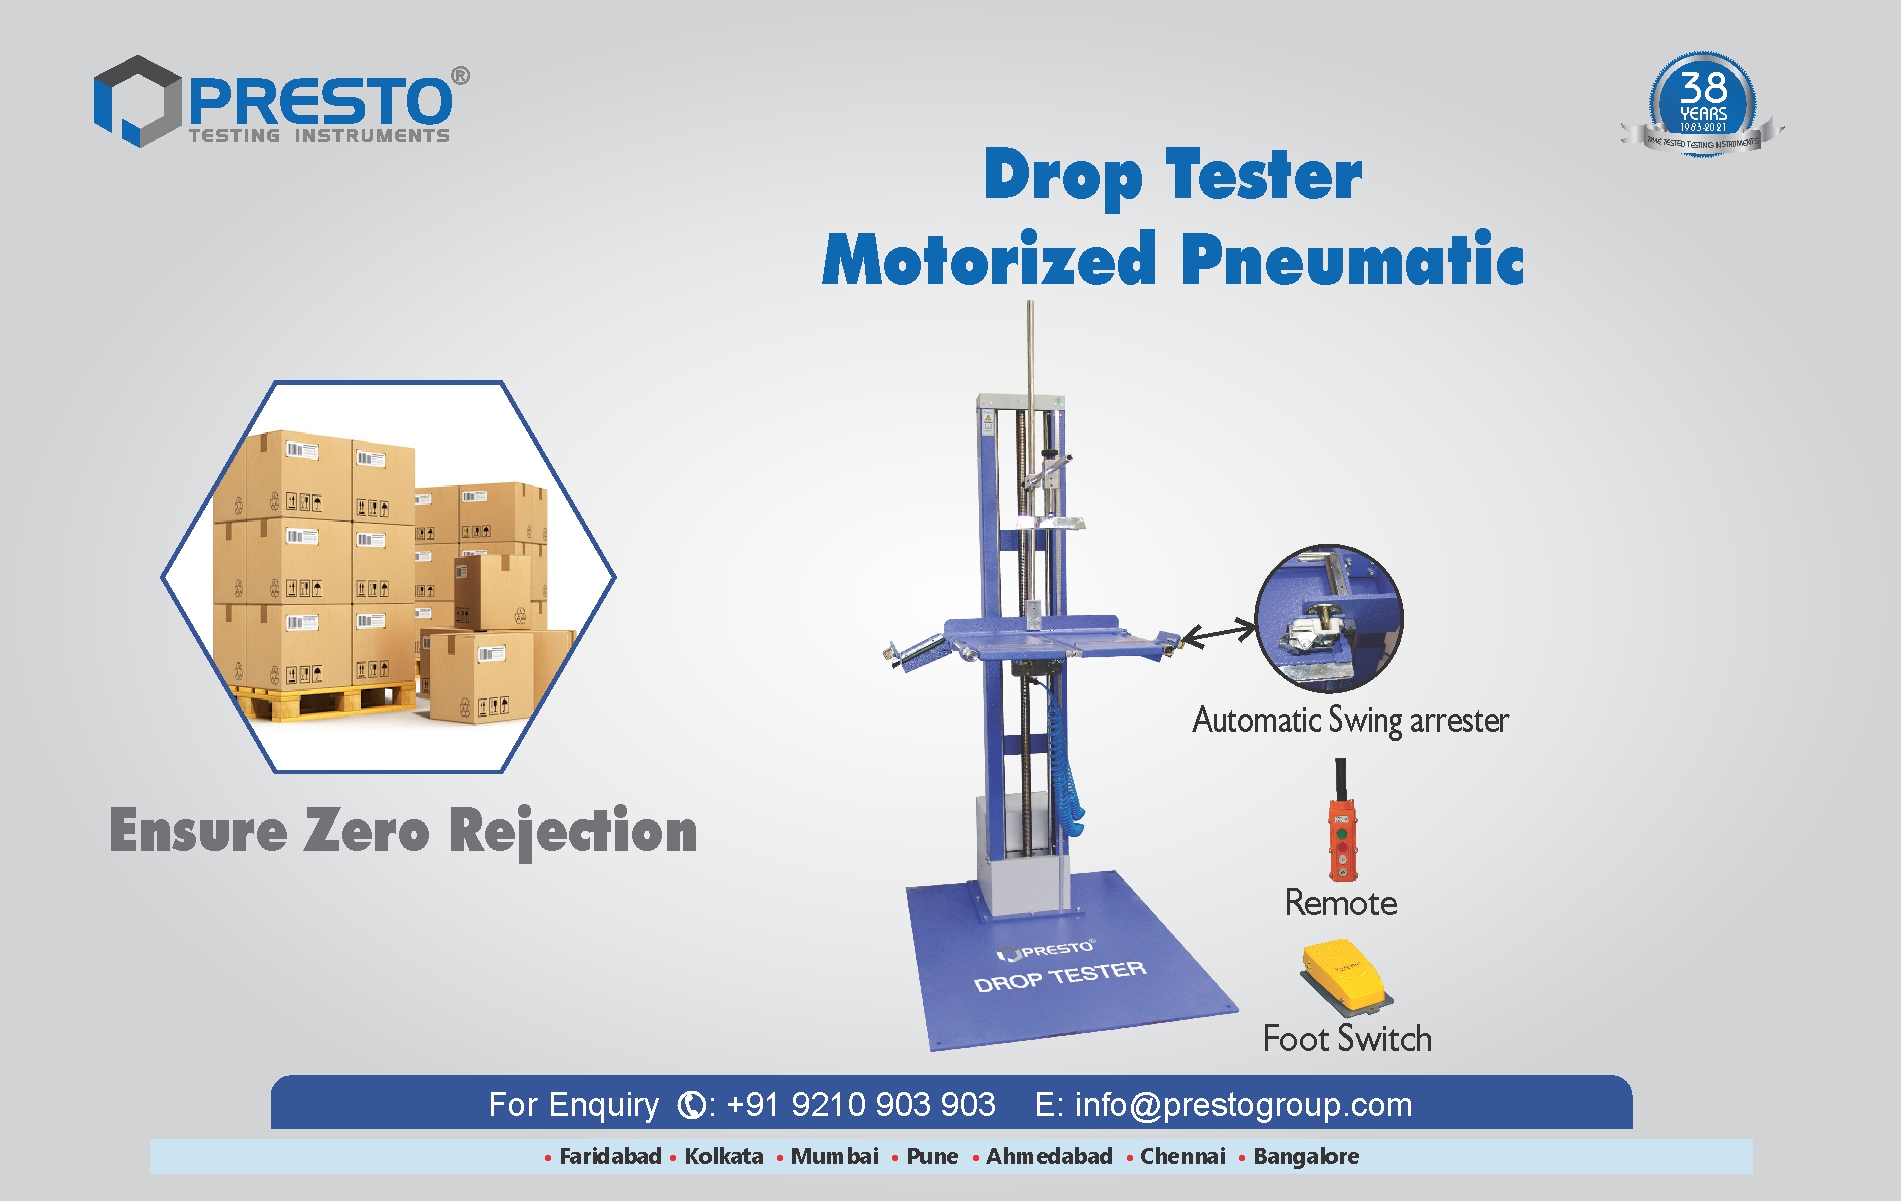 Drop Tester Motorized Pneumatic